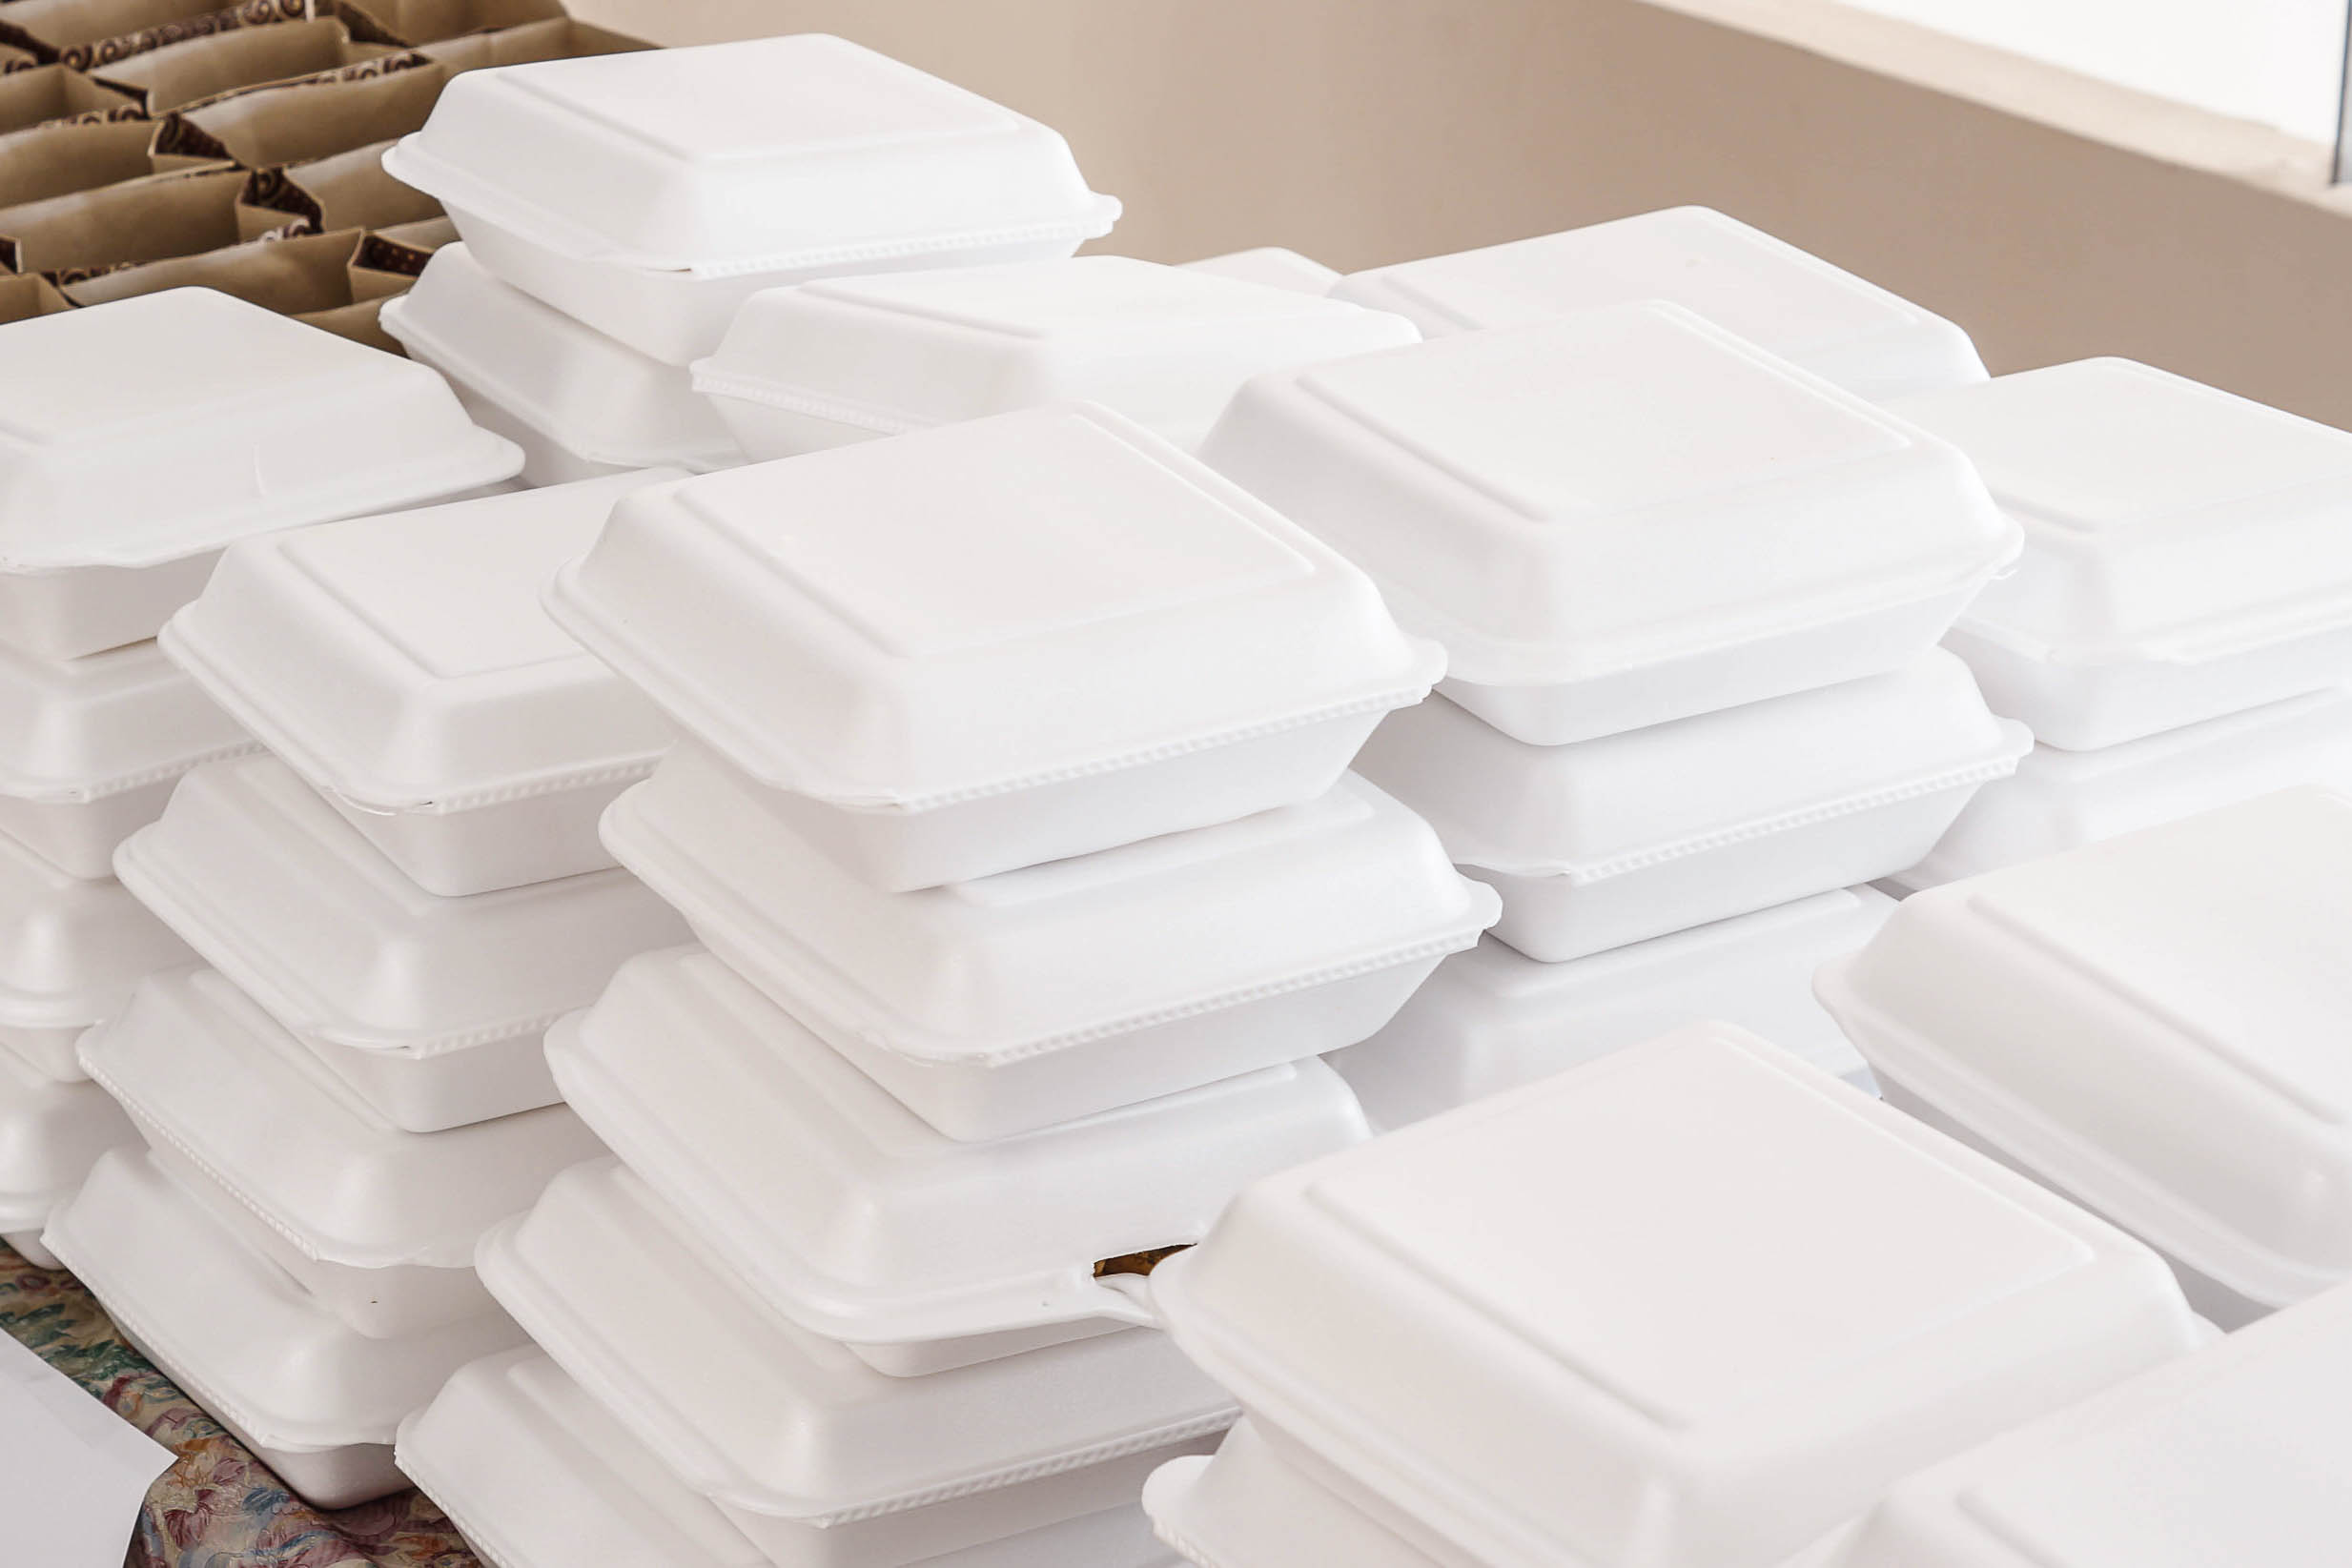 Disadvantages of Styrofoam Box